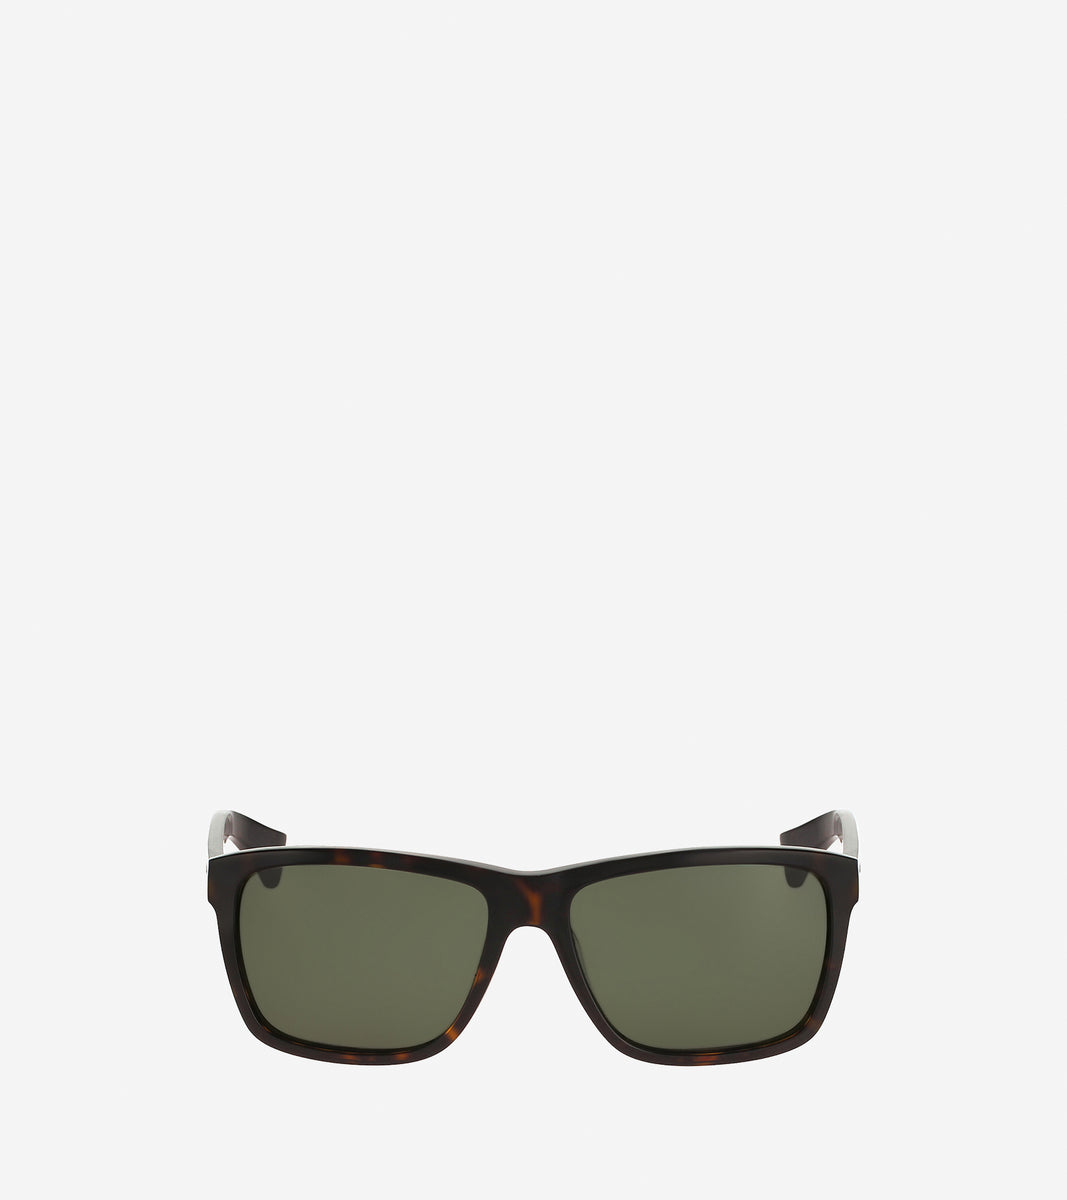 ColeHaan-Modified Rectangle Sunglasses-sg1019-Dark Tortoise